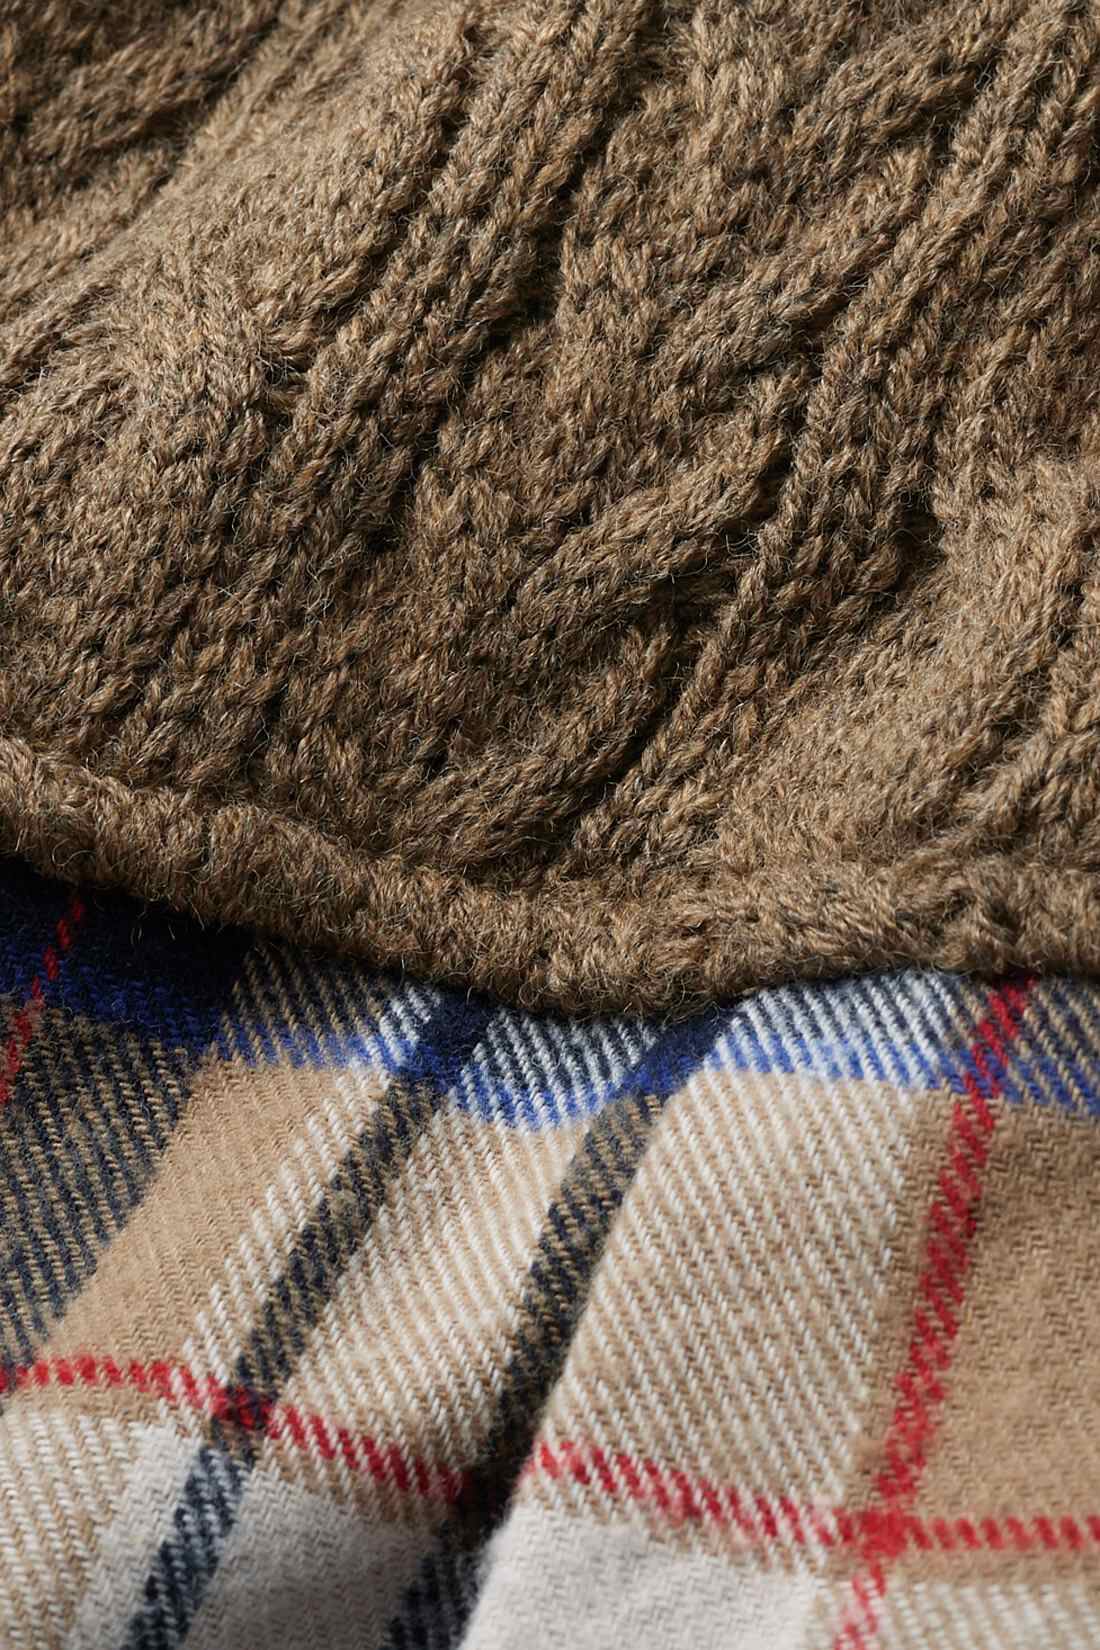 Live in  comfort|リブ イン コンフォート　ニット切り替えがやさしい雰囲気のチェックシャツチュニック〈ネイビー〉|2種類のケーブル編みとチェック生地で、表情豊かに。　※お届けするカラーとは異なります。